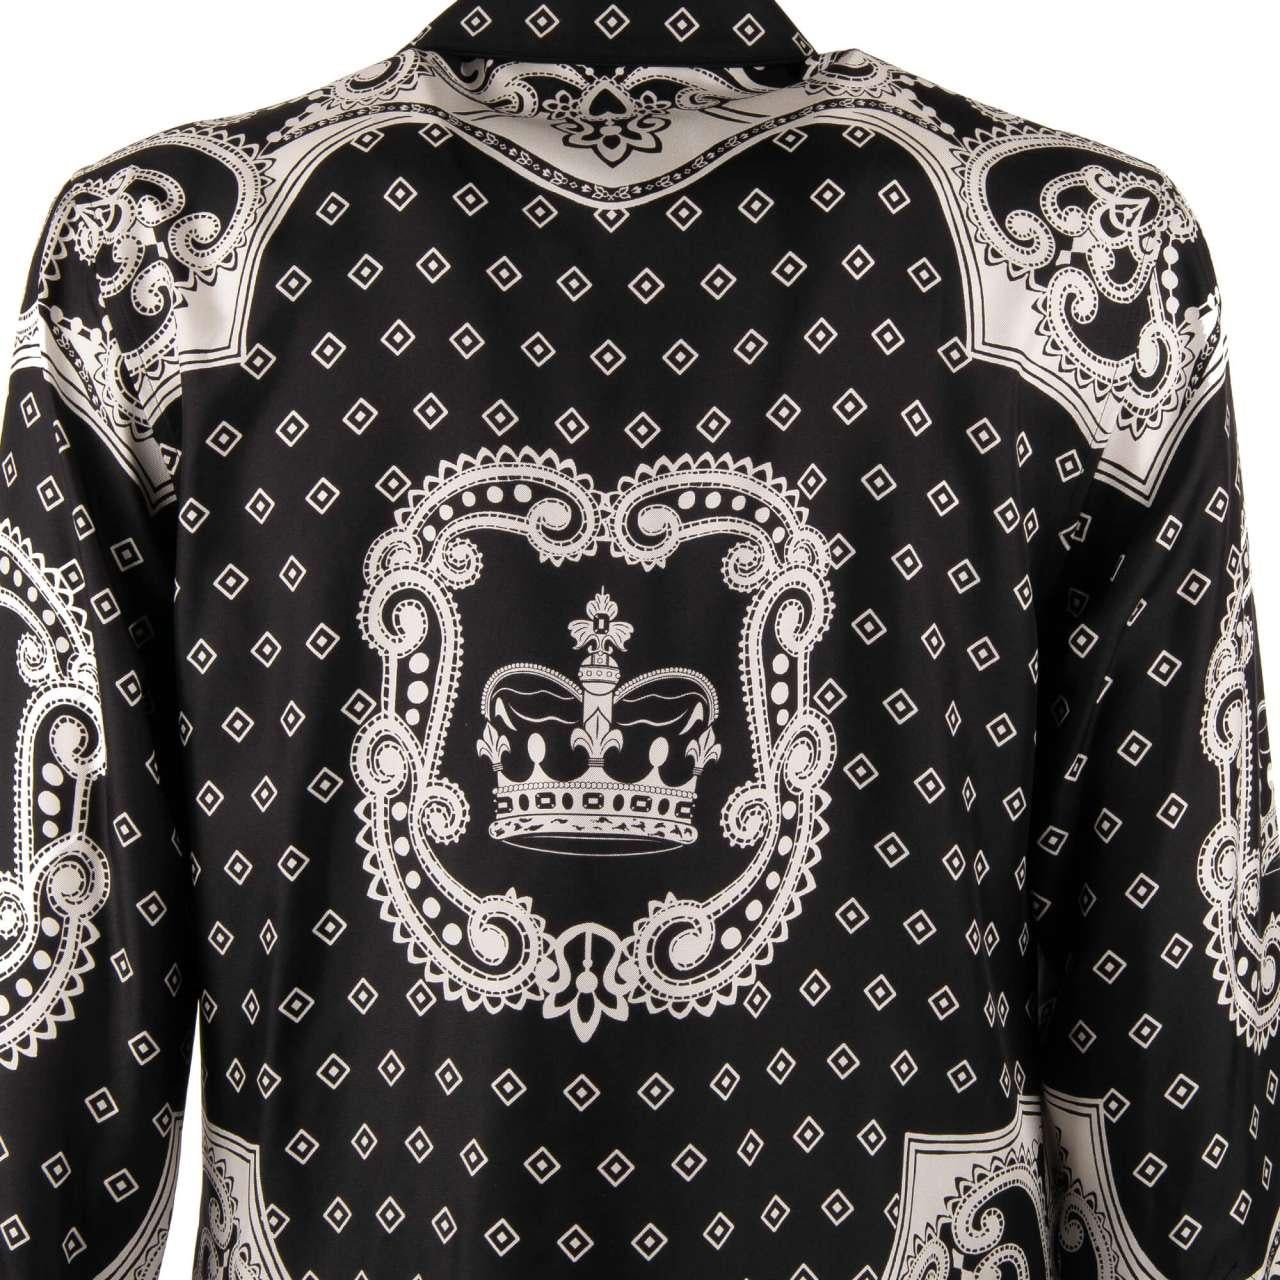 Dolce & Gabbana Crown Geometric Pattern Silk Shirt Black White 37/14.5 In Excellent Condition For Sale In Erkrath, DE